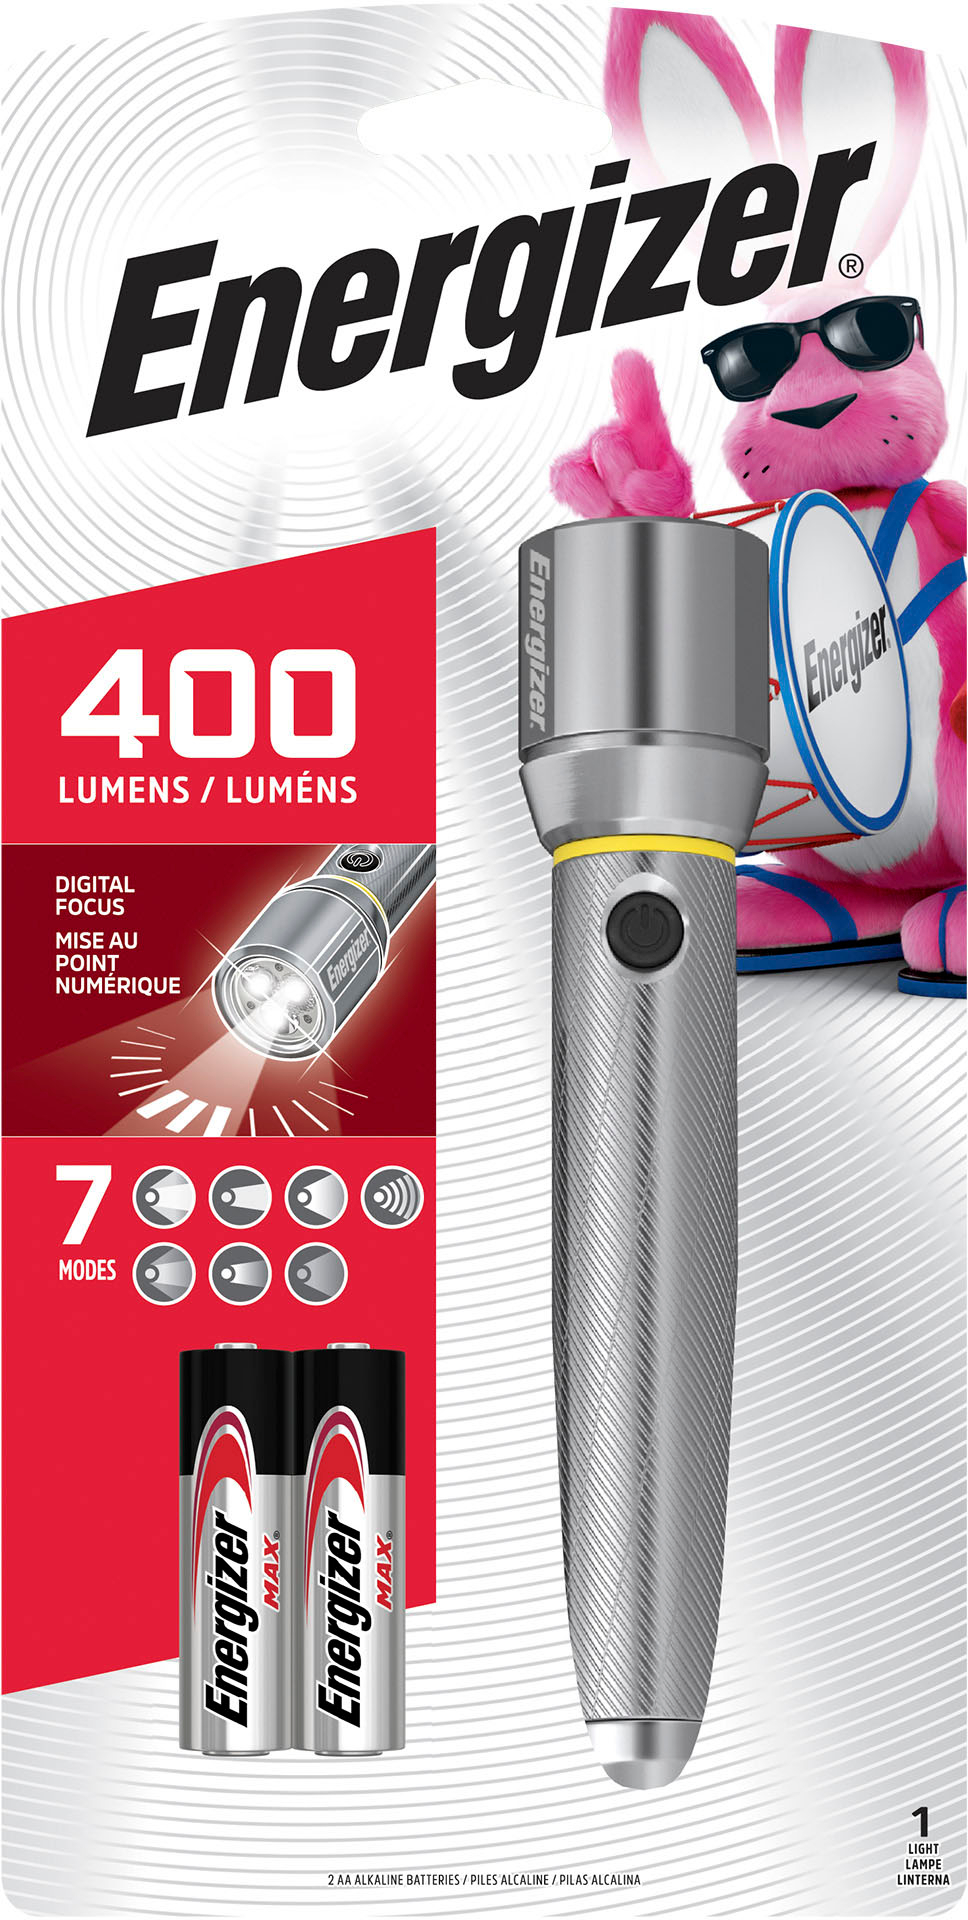 Energizer Full-Access Lantern Spotlight